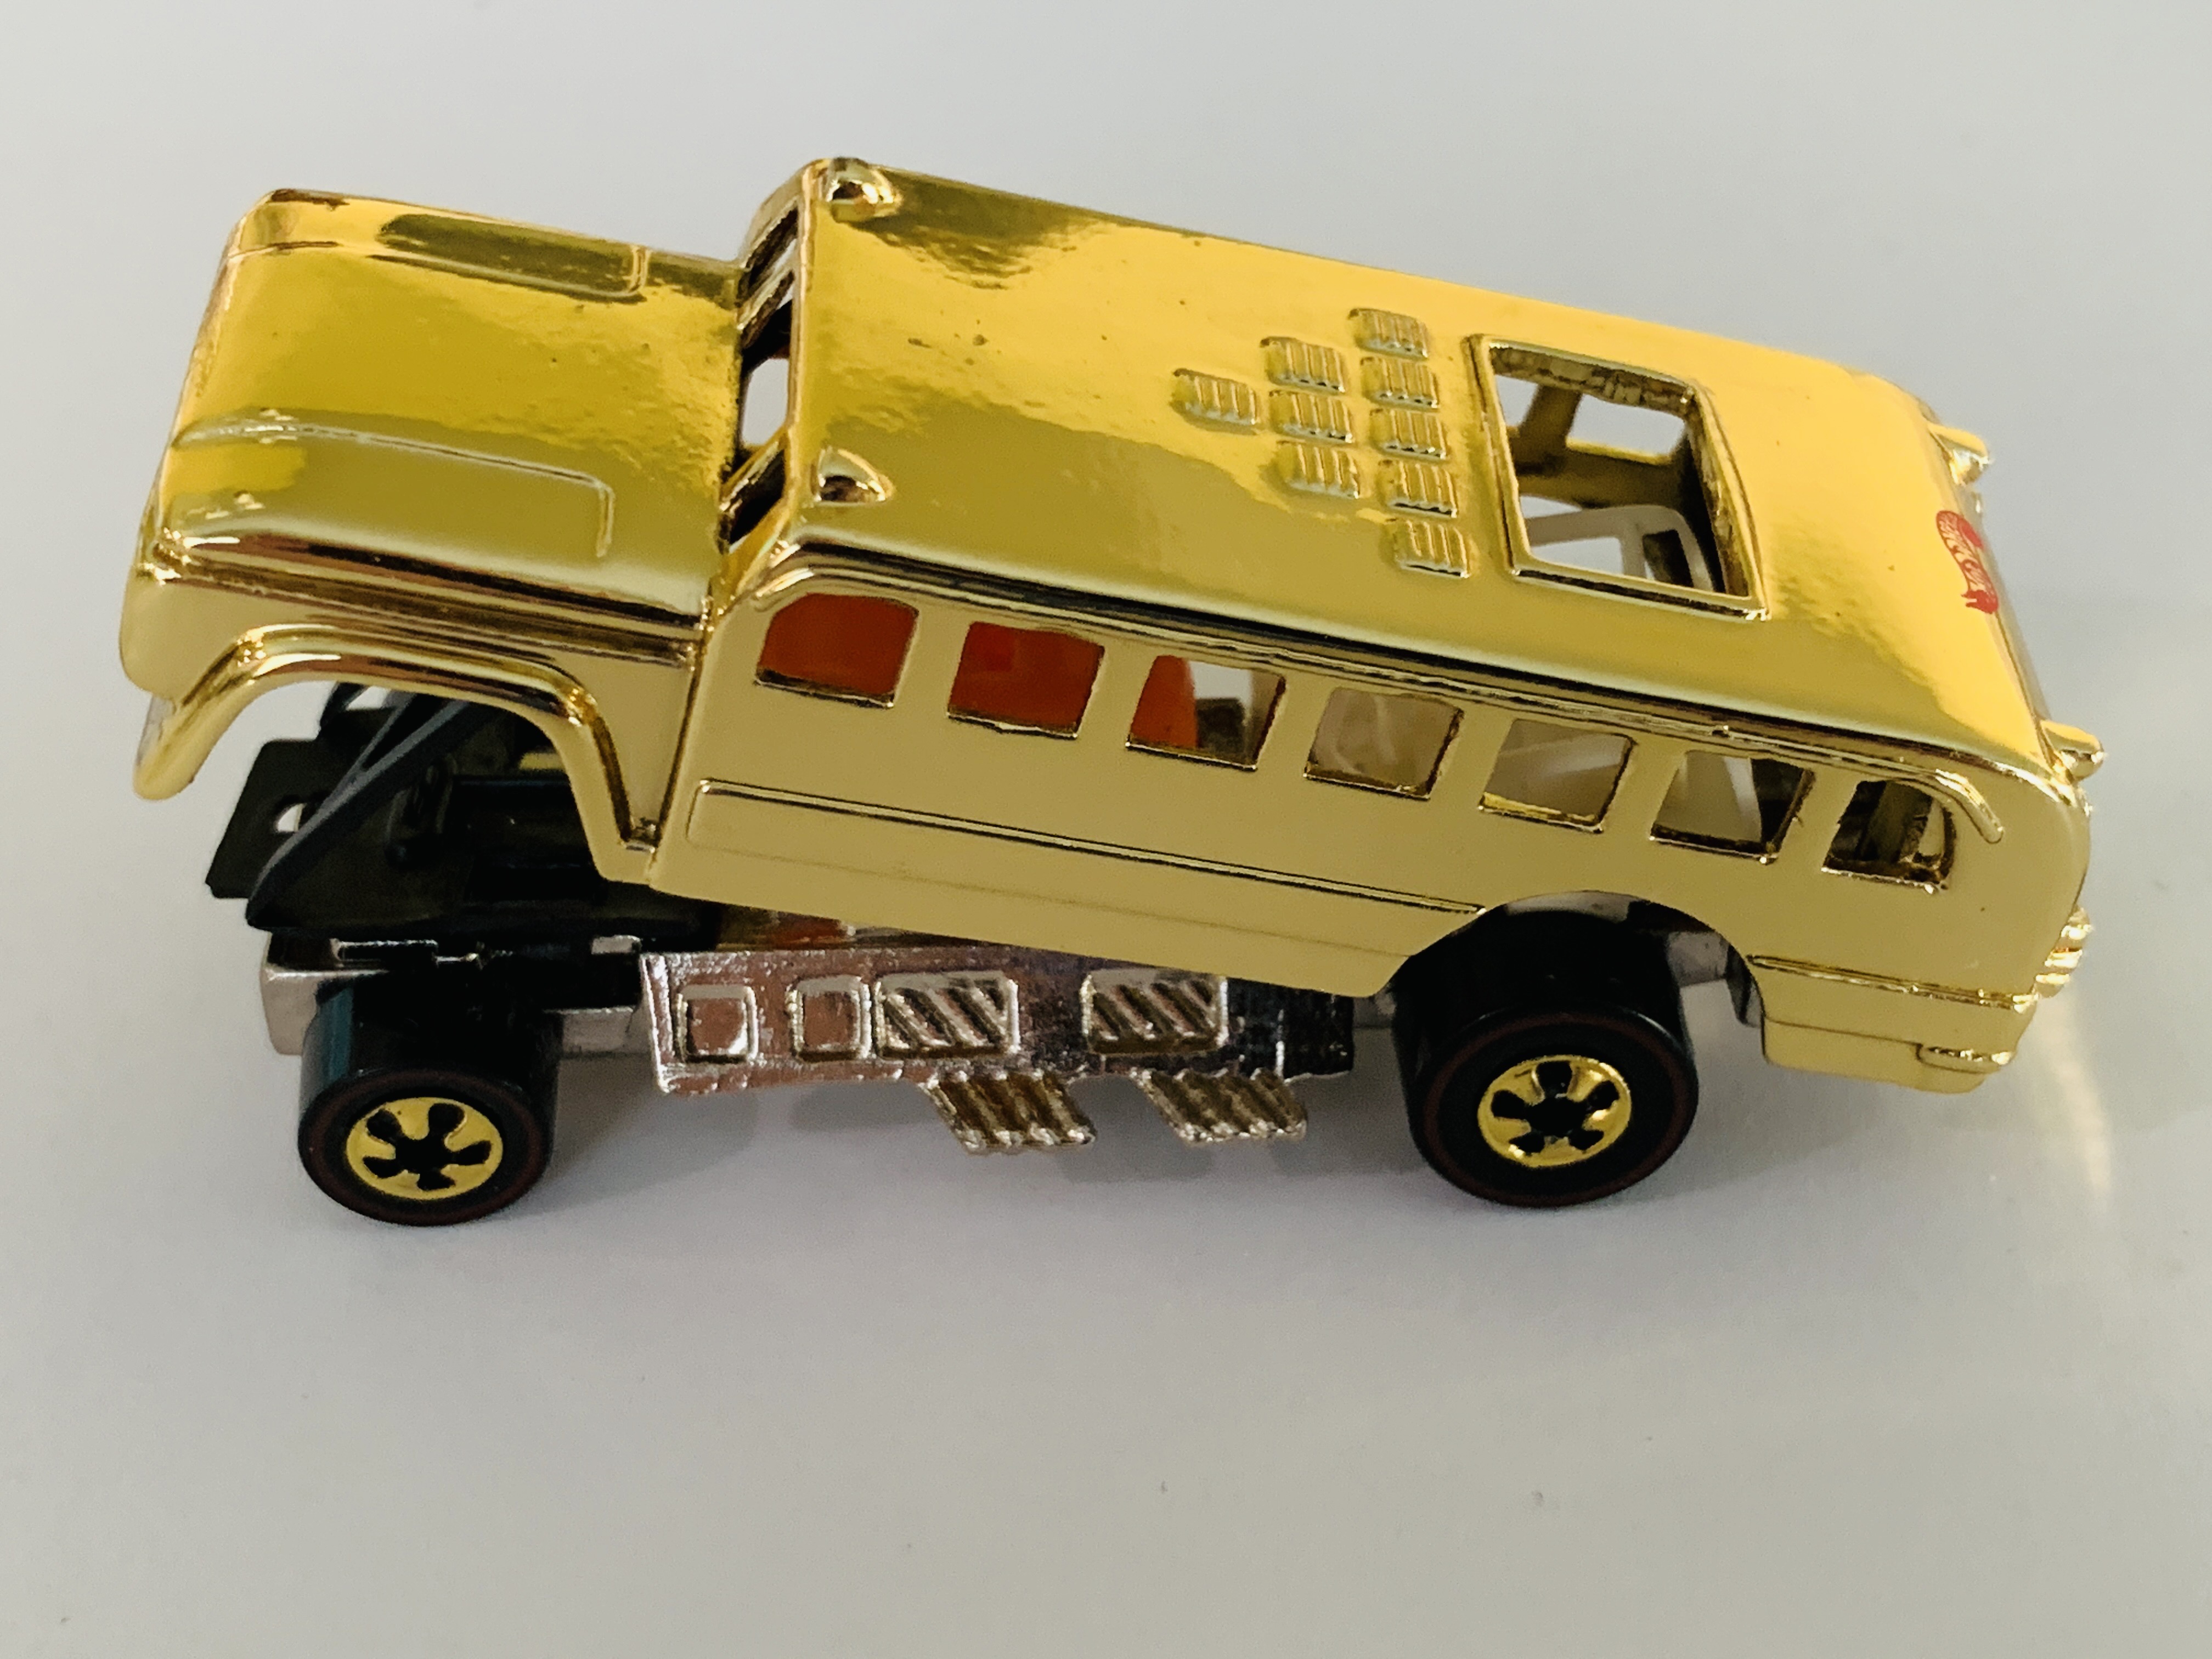 Hot Wheels FAO Schwarz Gold Series II S' Cool Bus